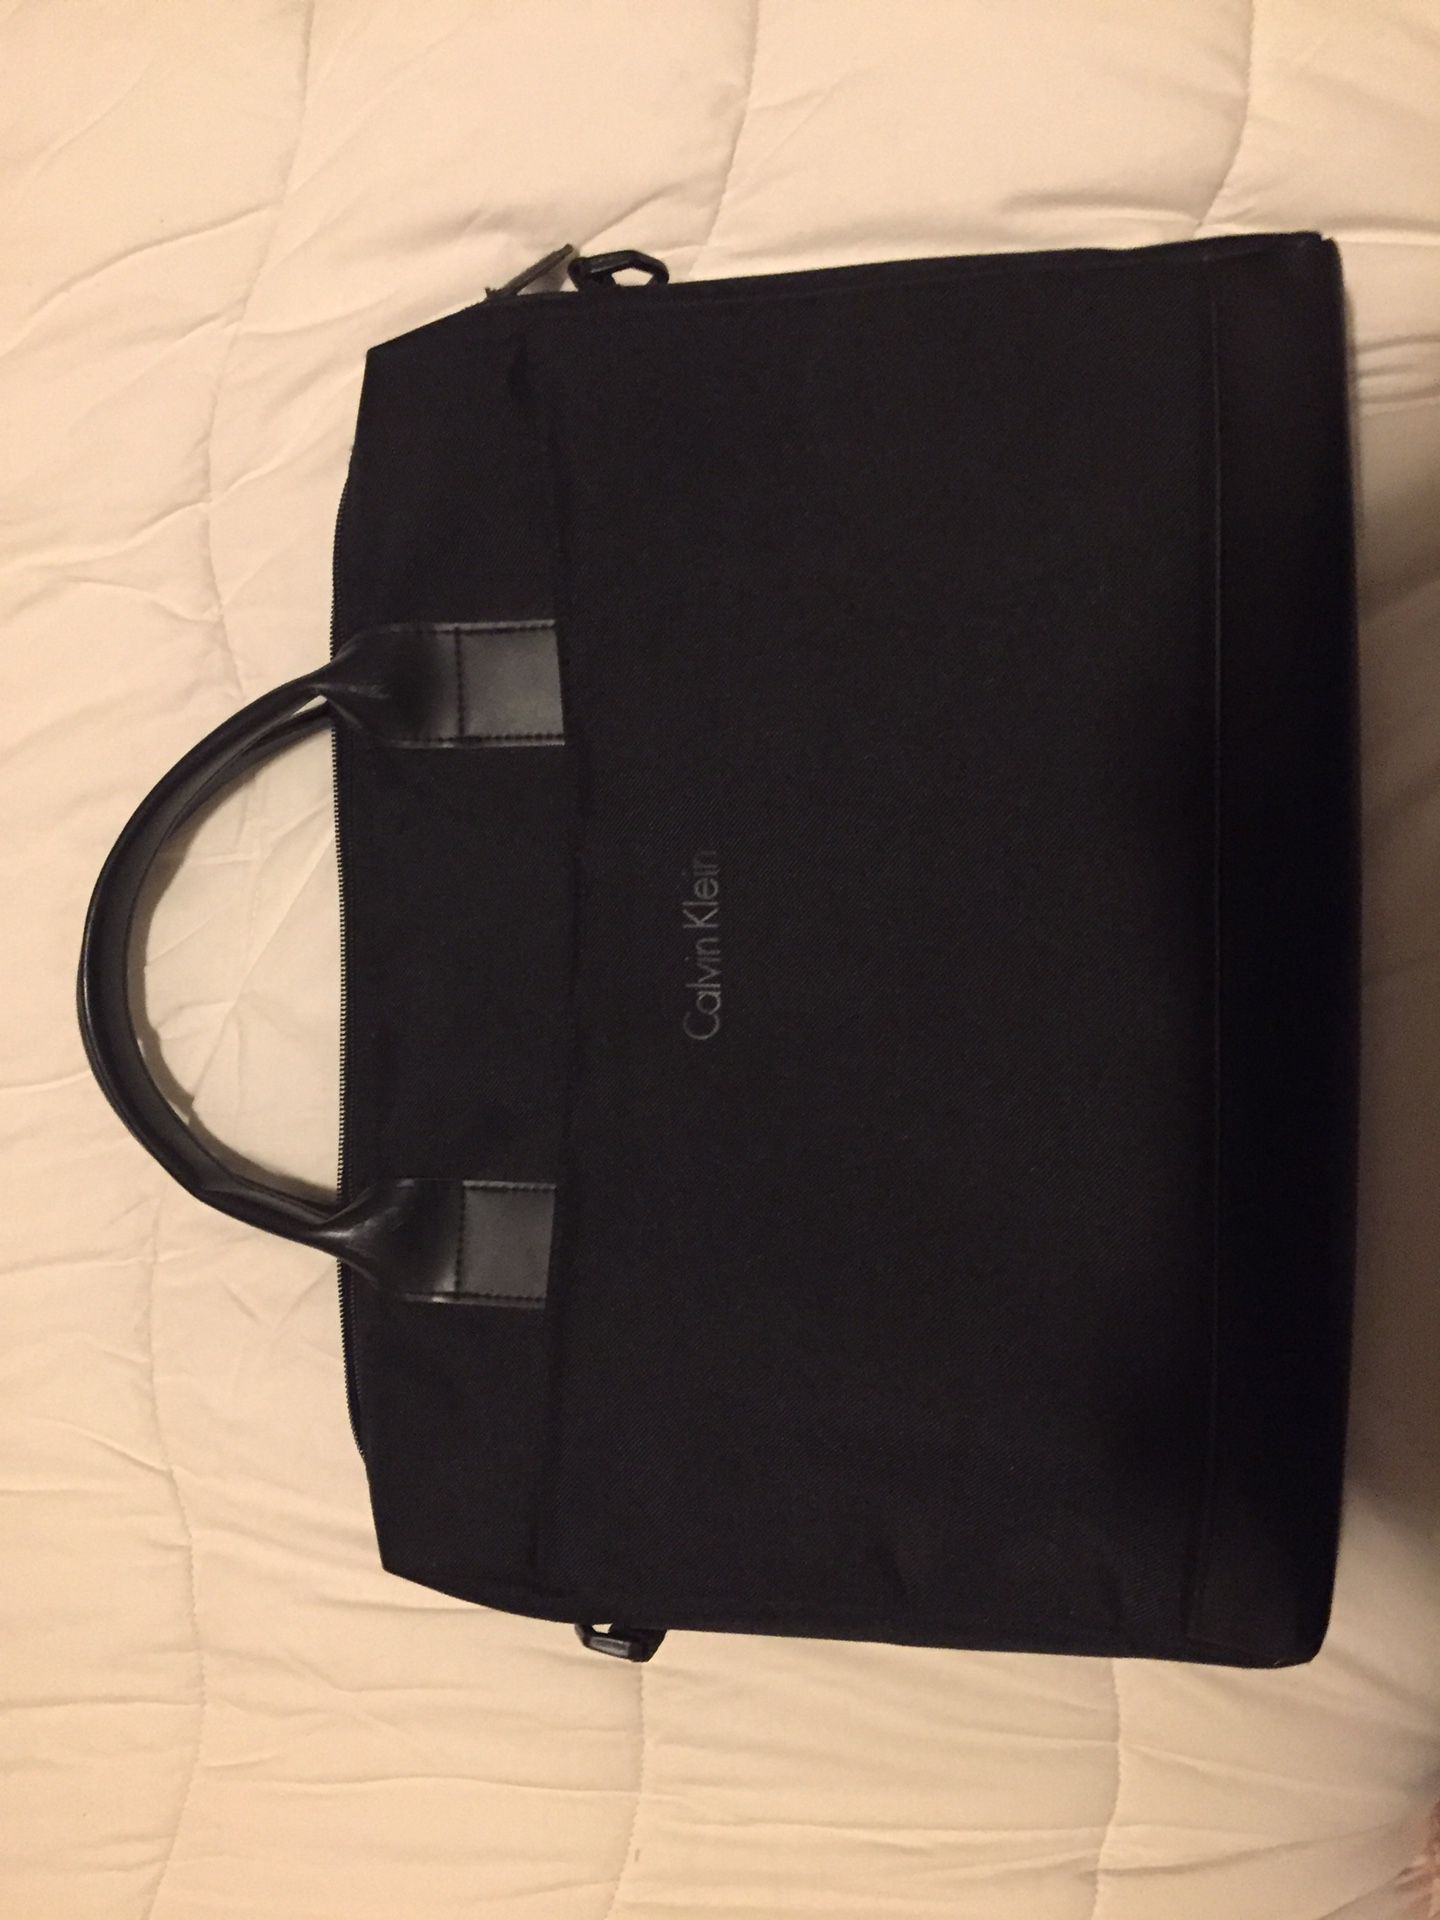 15”x12”x2” leather Calvin Klein laptop bag